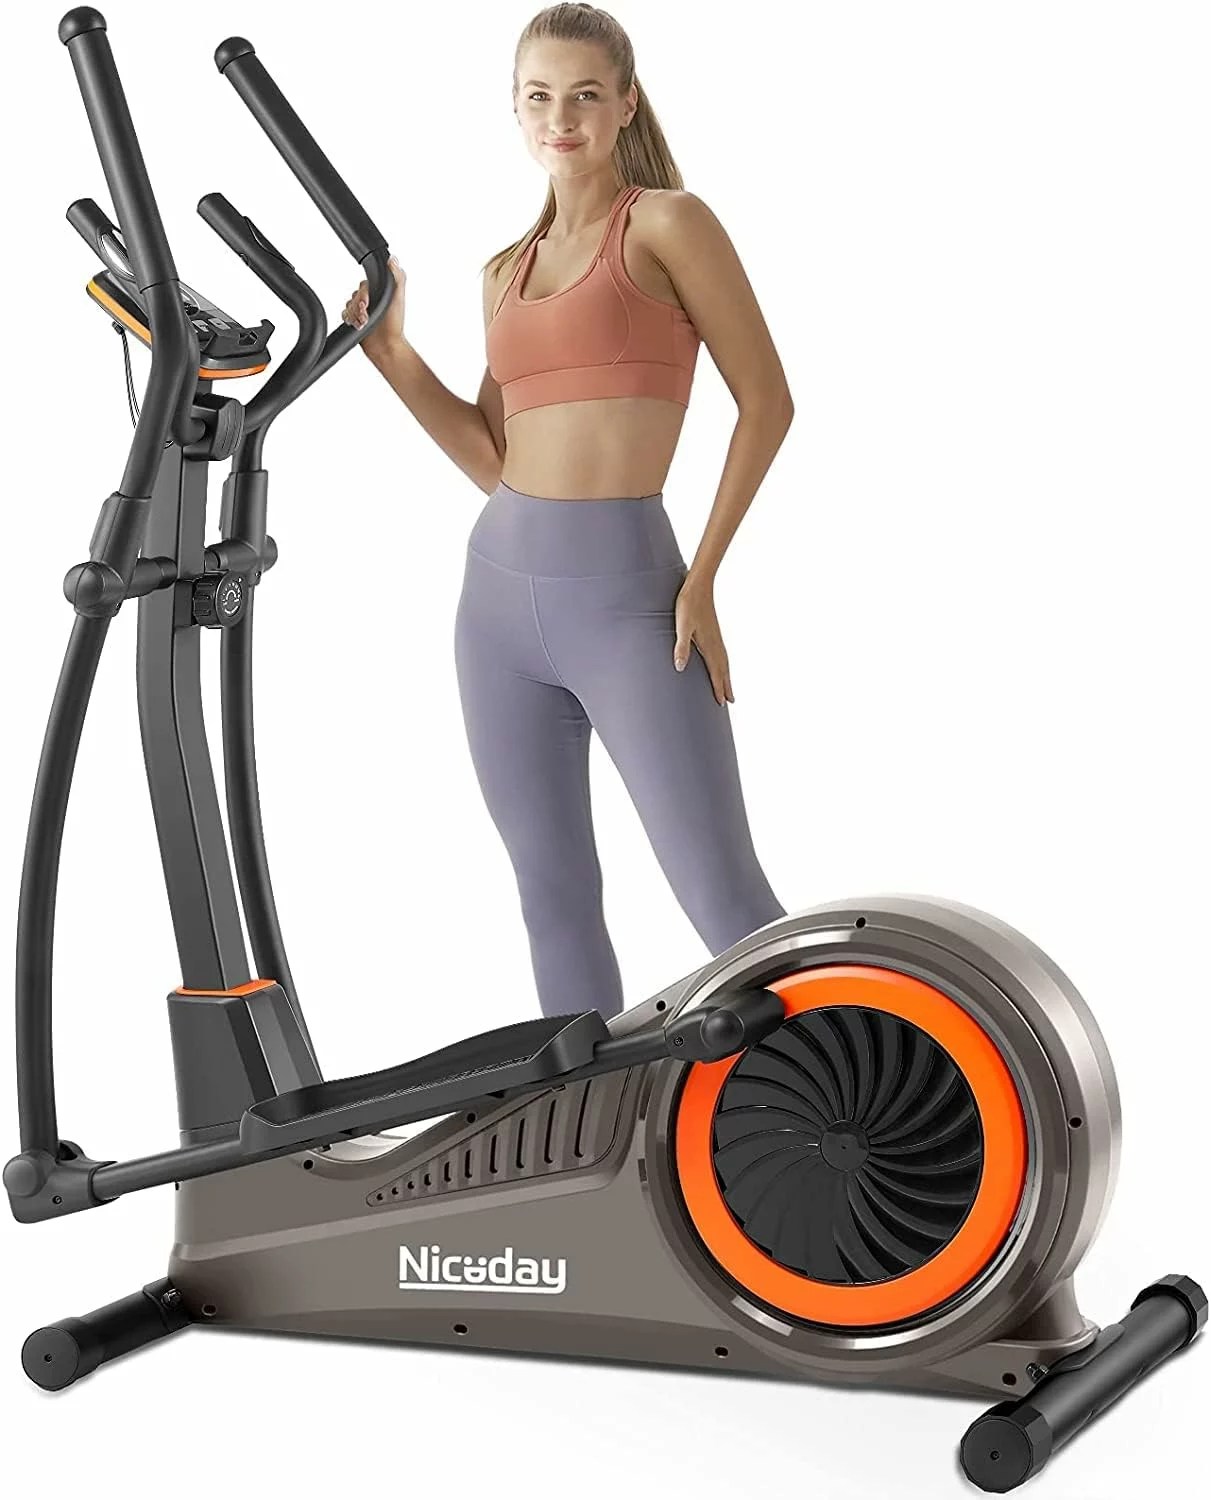 niceday elliptical machine